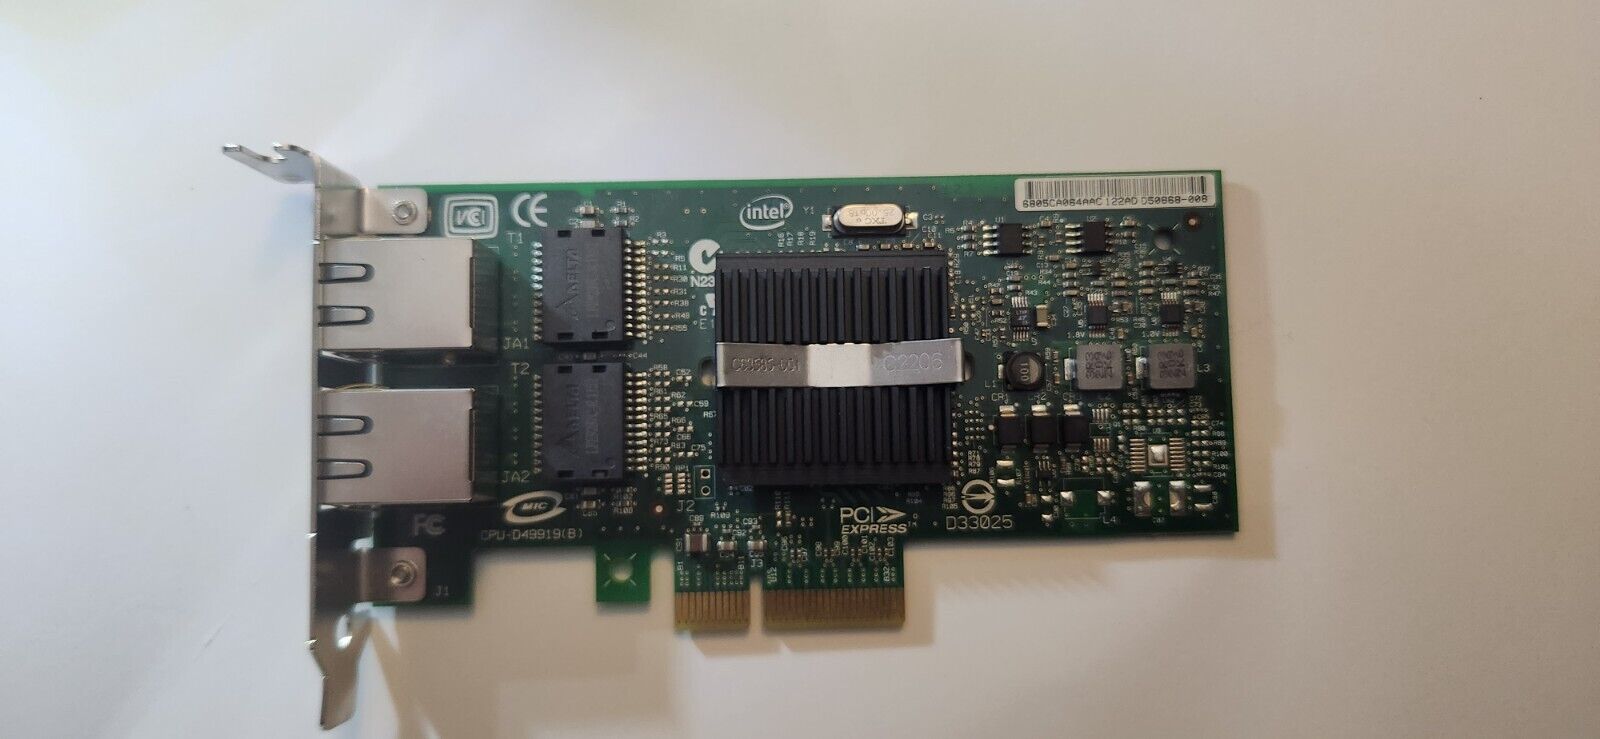 Intel PRO/1000 PT Dual Port Server Adapter LP - Network Adapter (EXPI9402PTBLK)